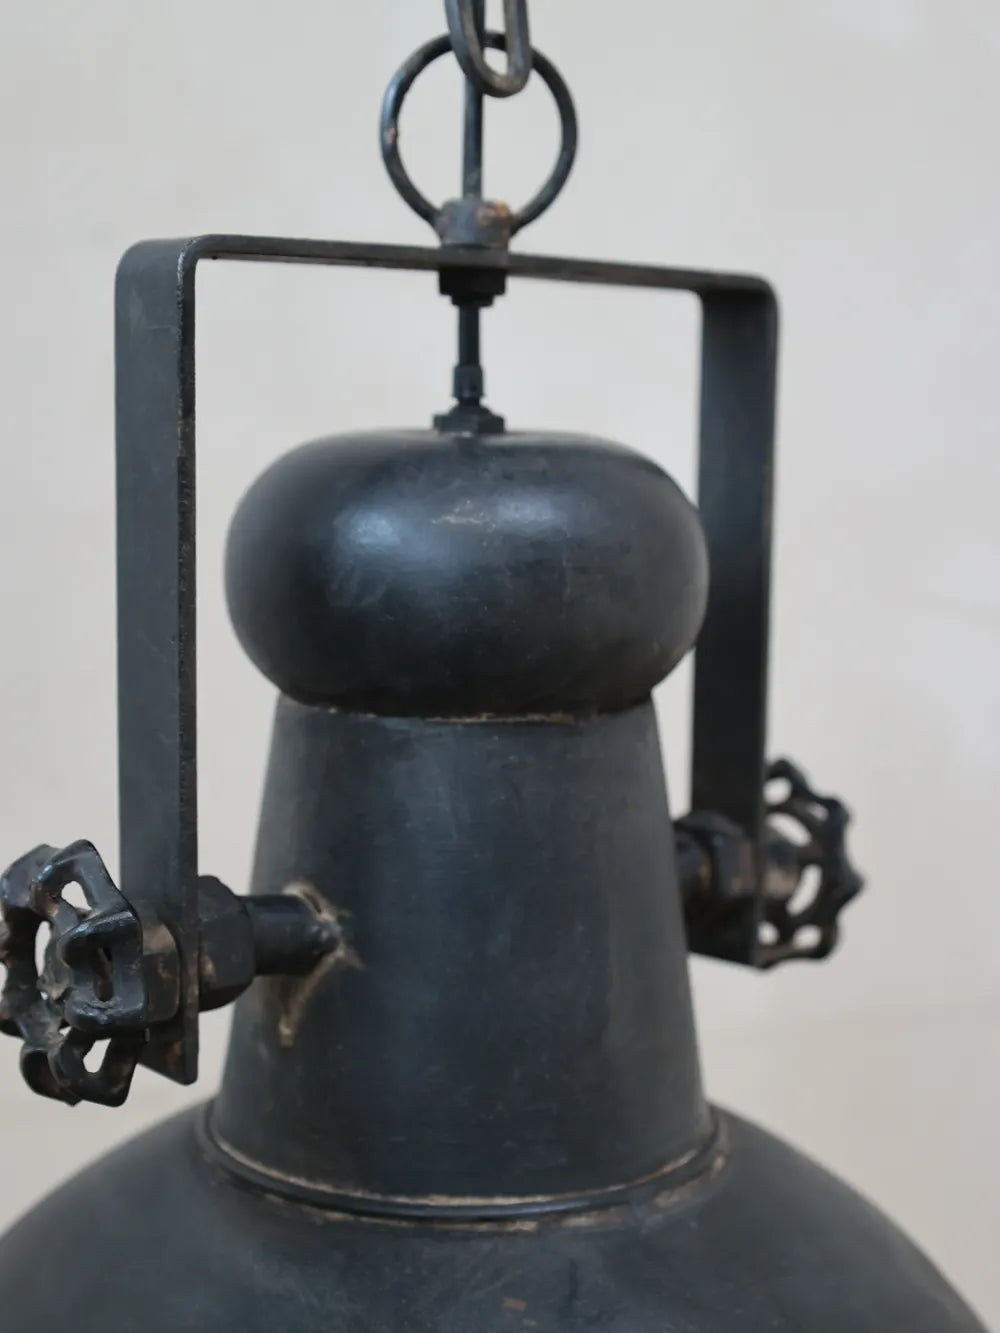 Chic Antuque - Factory Lamp antique black